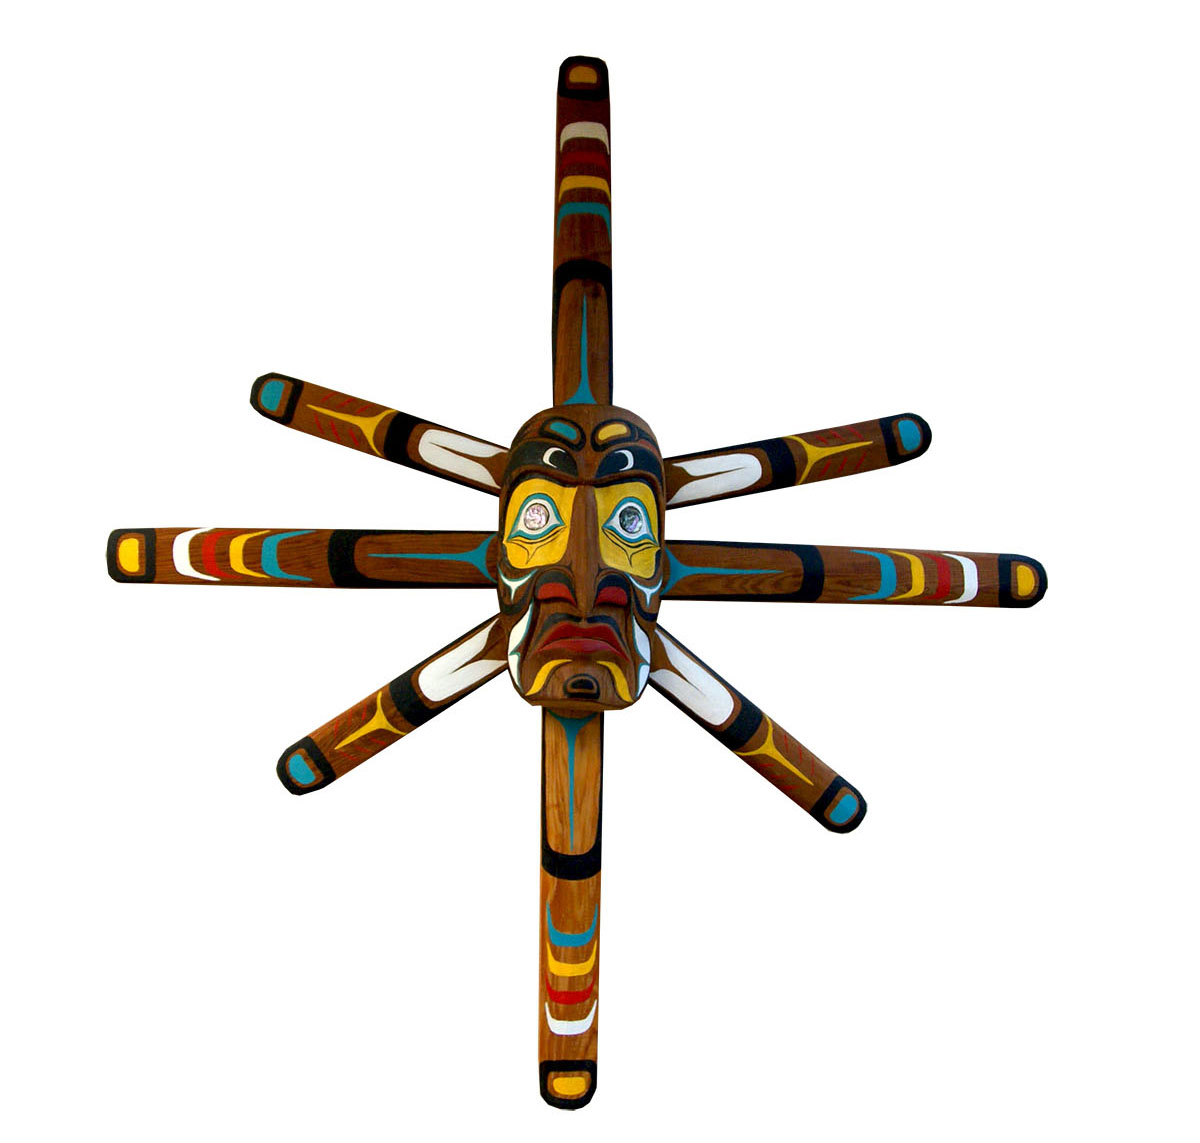 Sun Mask - Canadian Indigenous Art Inc.